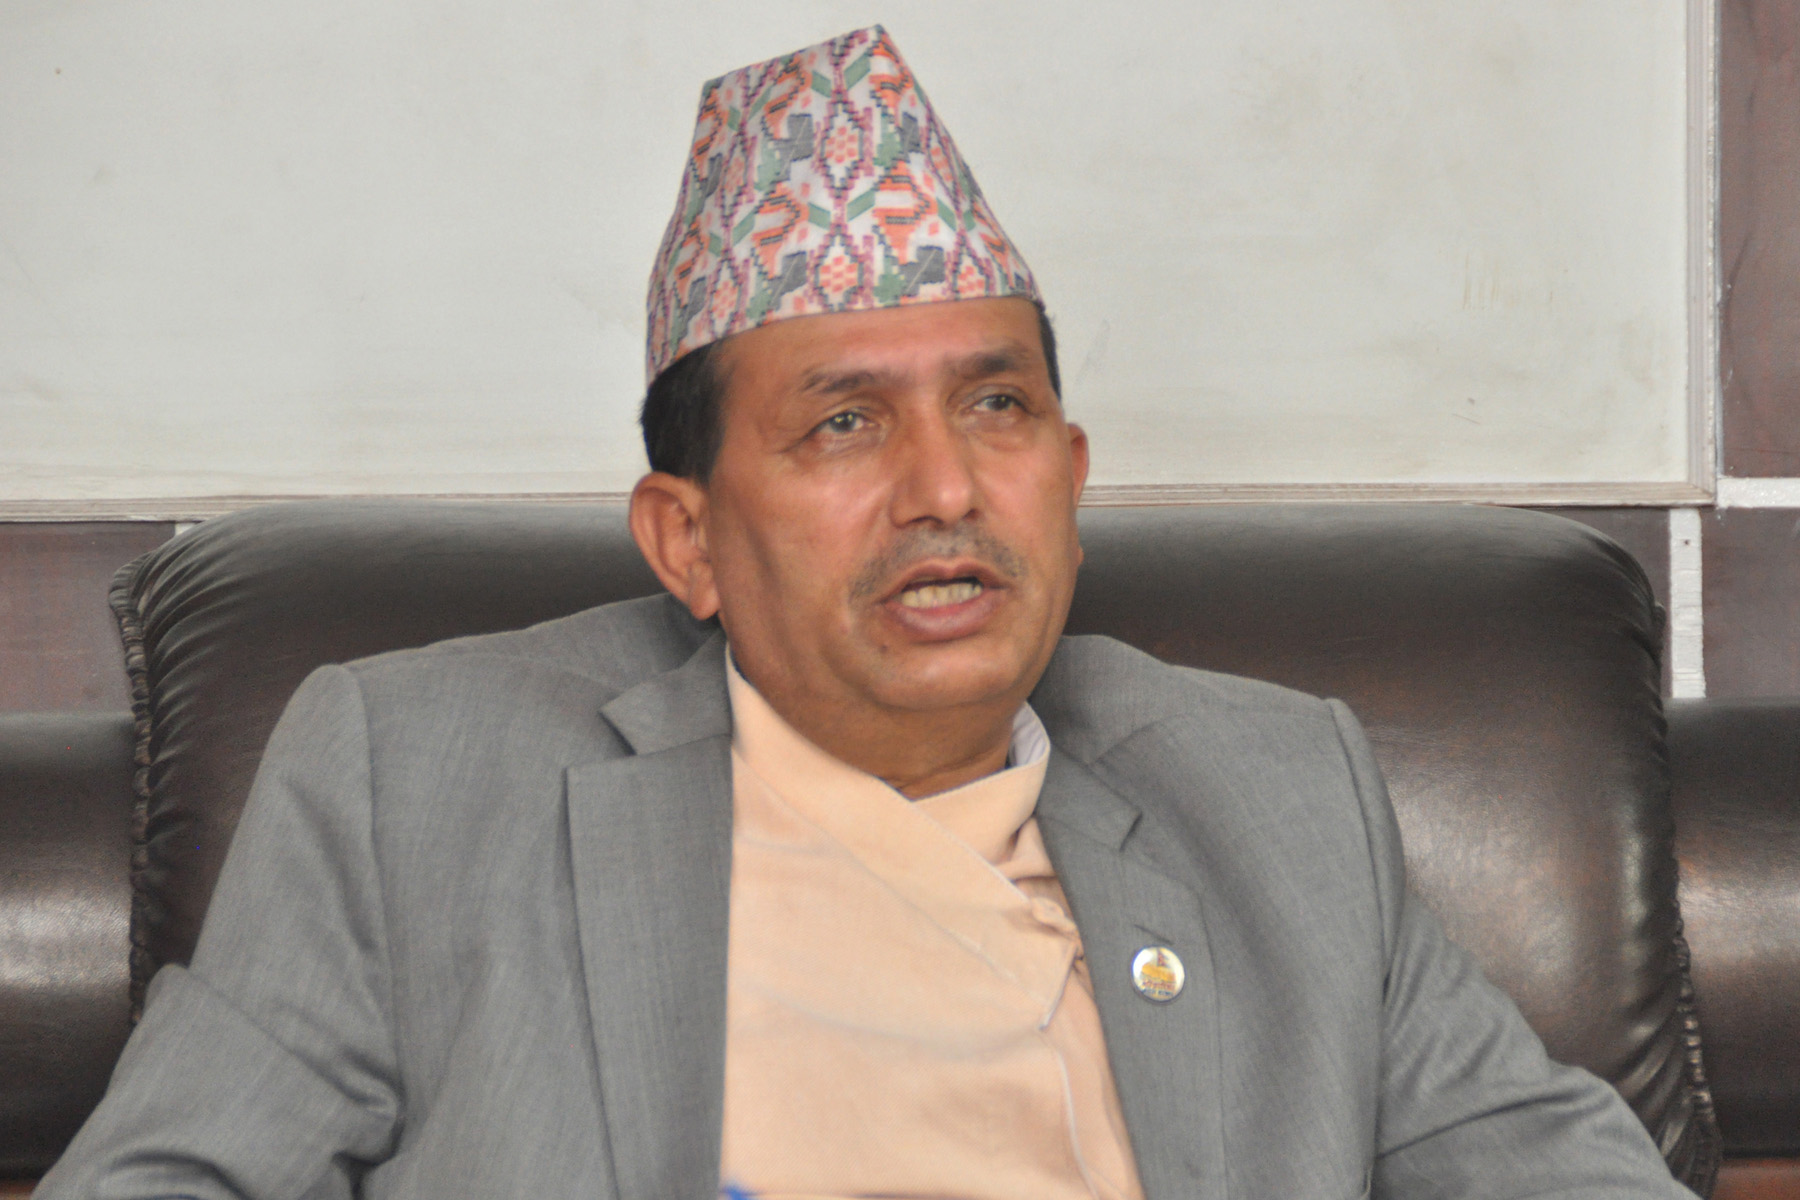 The Holi Festival promotes national unity: Tourism Minister Dhakal